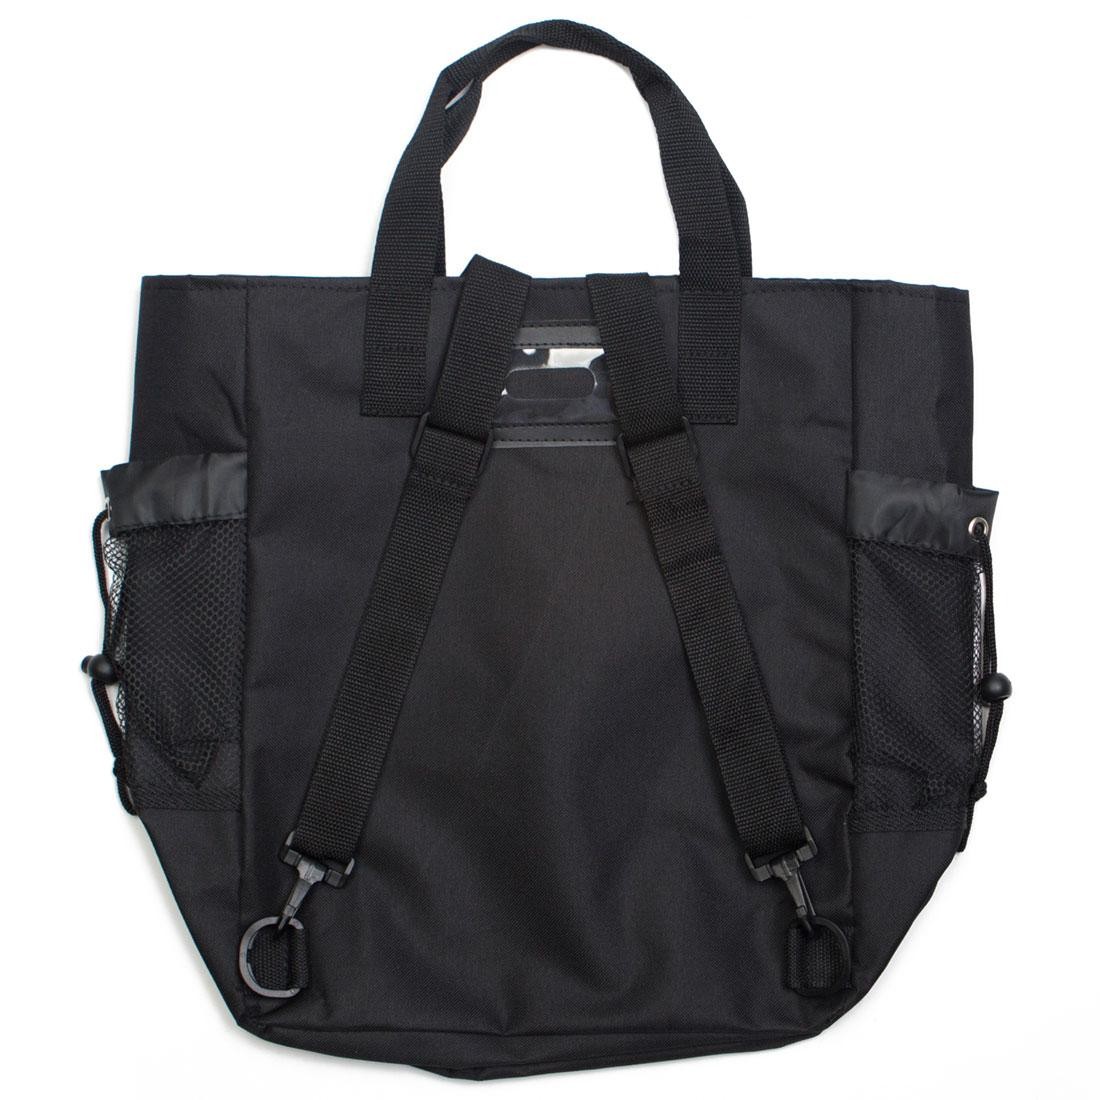 Dimepiece Convertible Backpack black